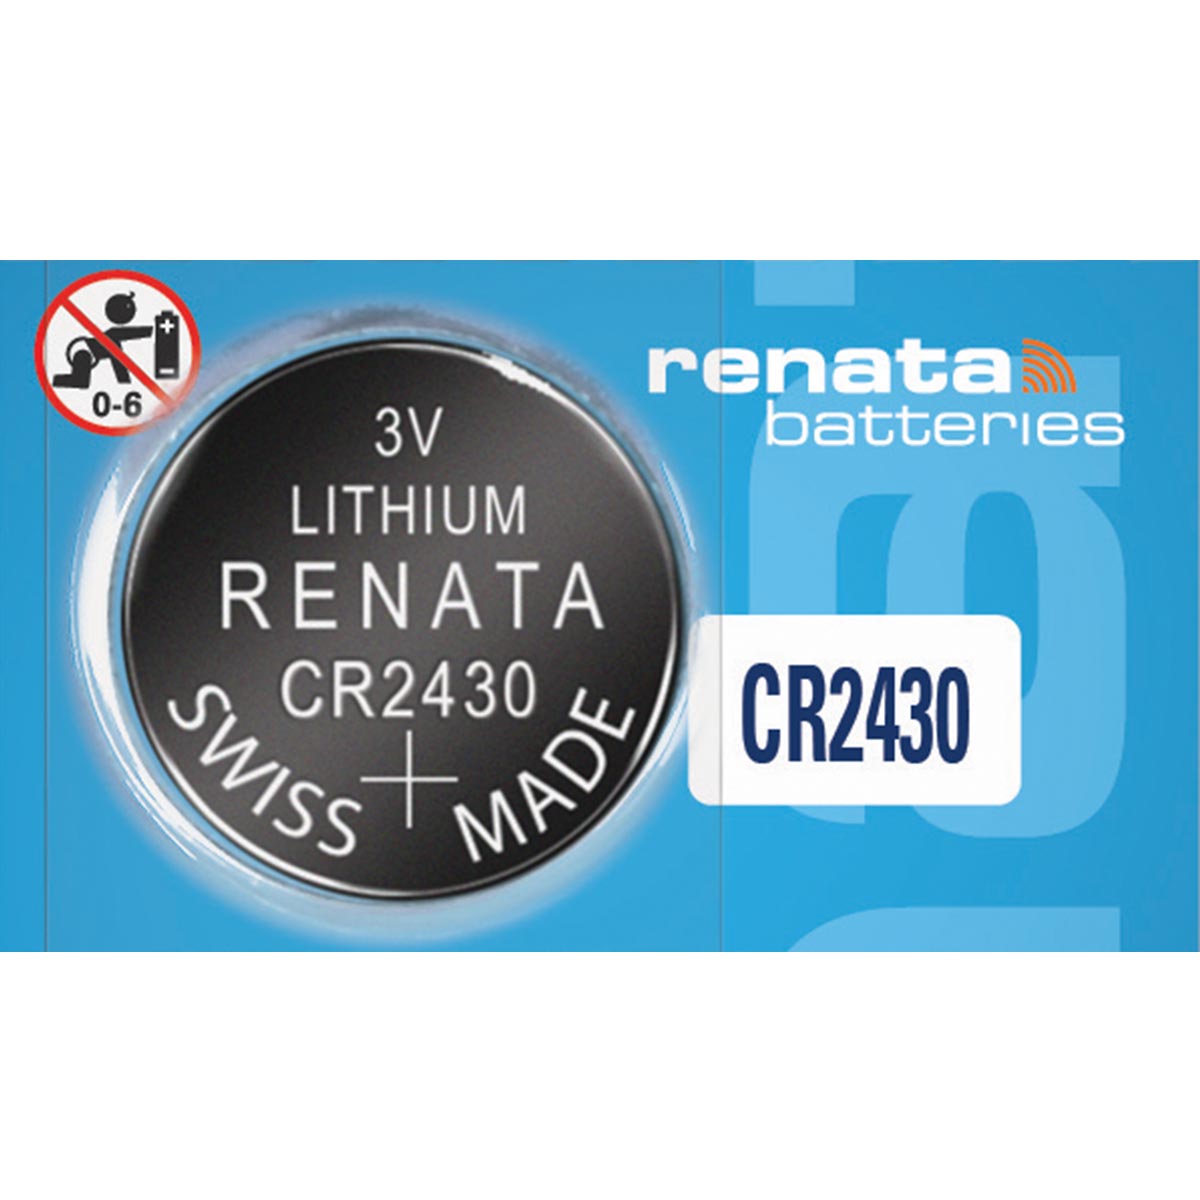 Renata CR2430 Battery 3V Lithium Coin Cell (1 pc.)